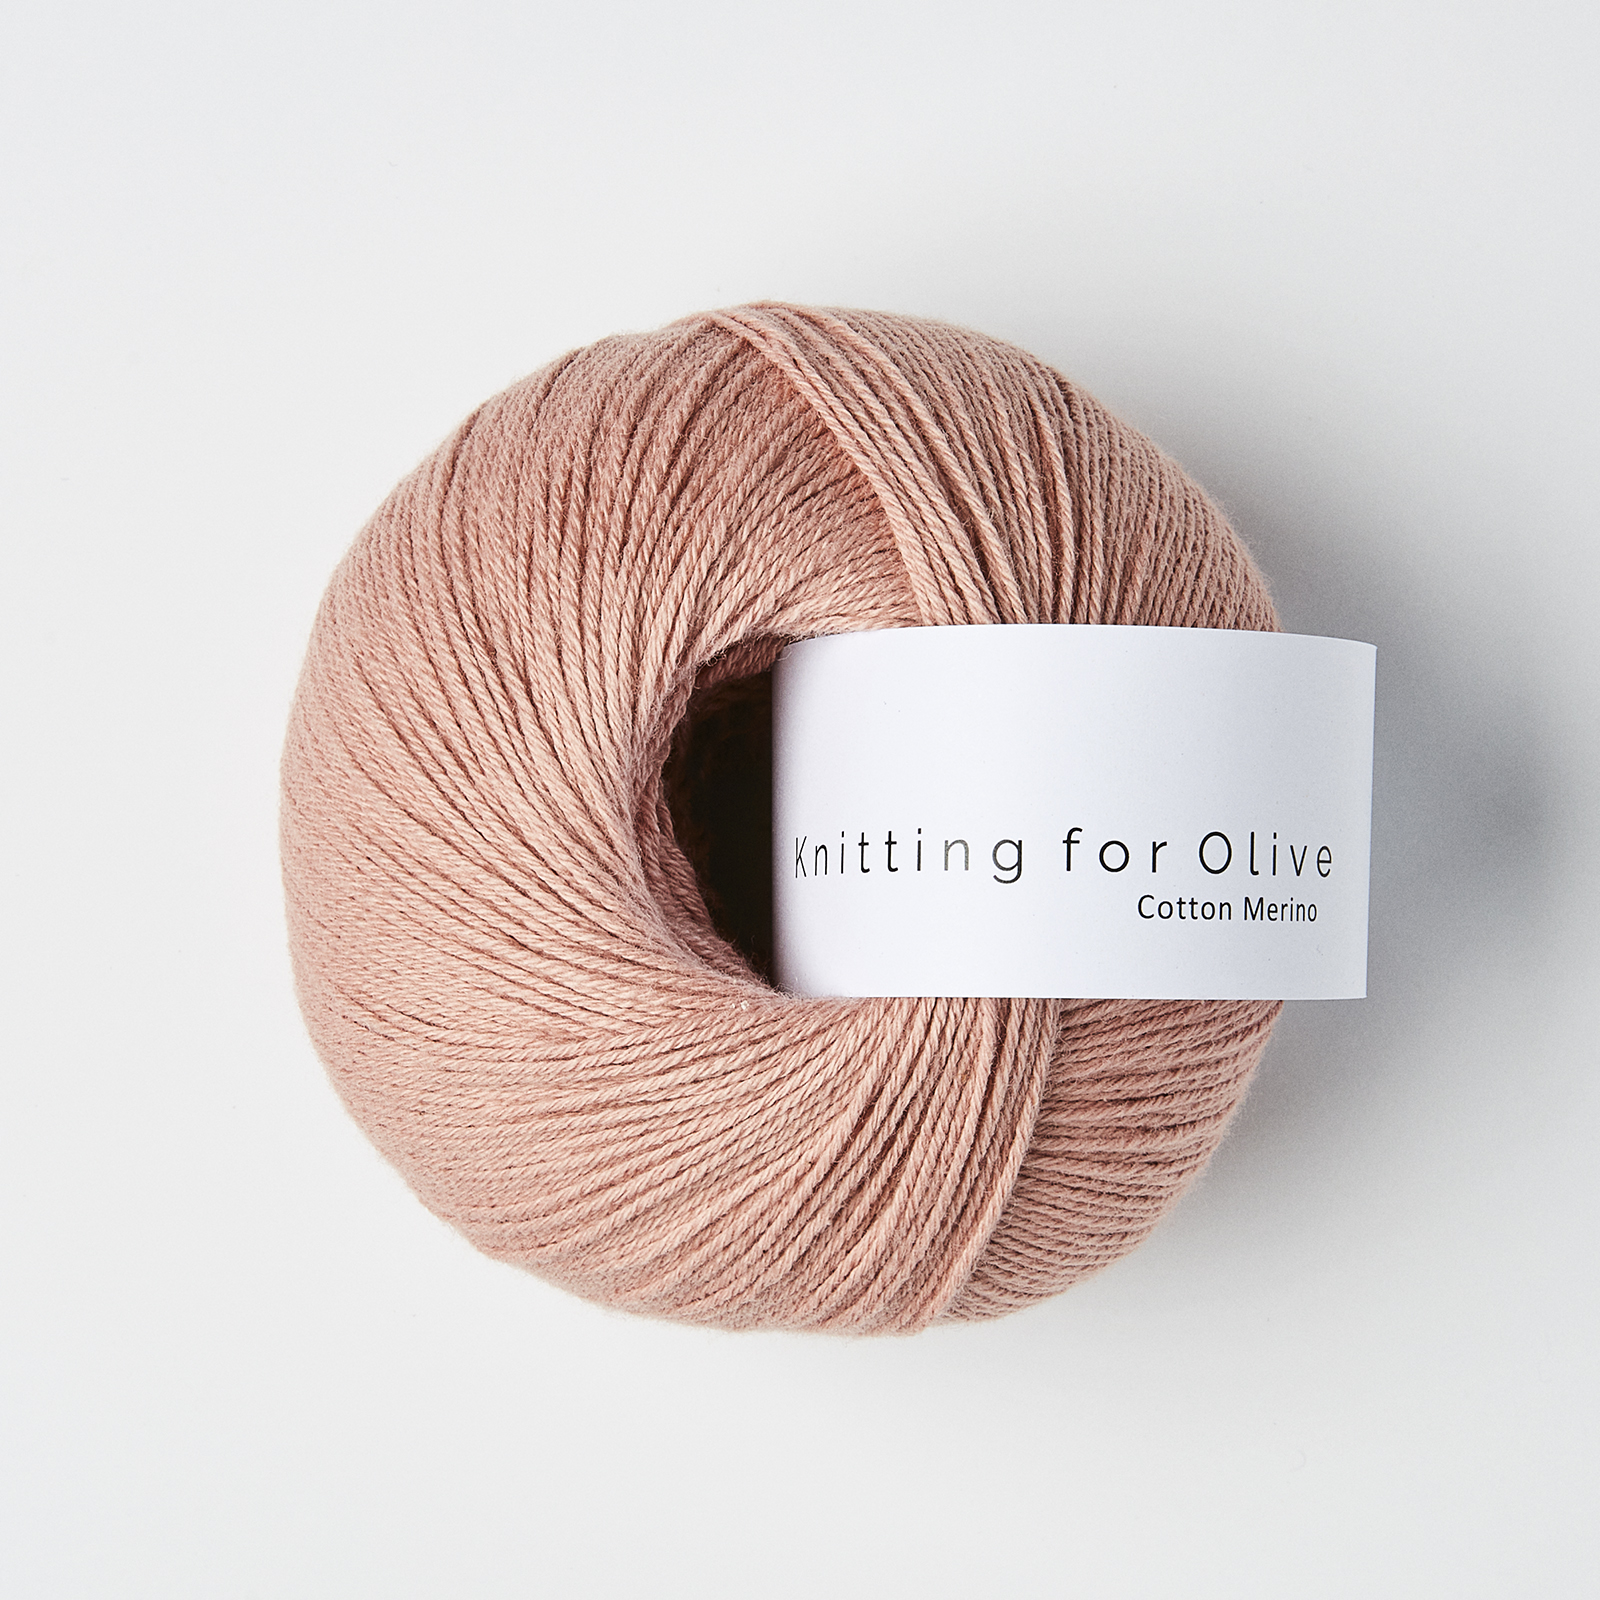 cotton merino knitting for olive | cotton merino: rhubarb rose